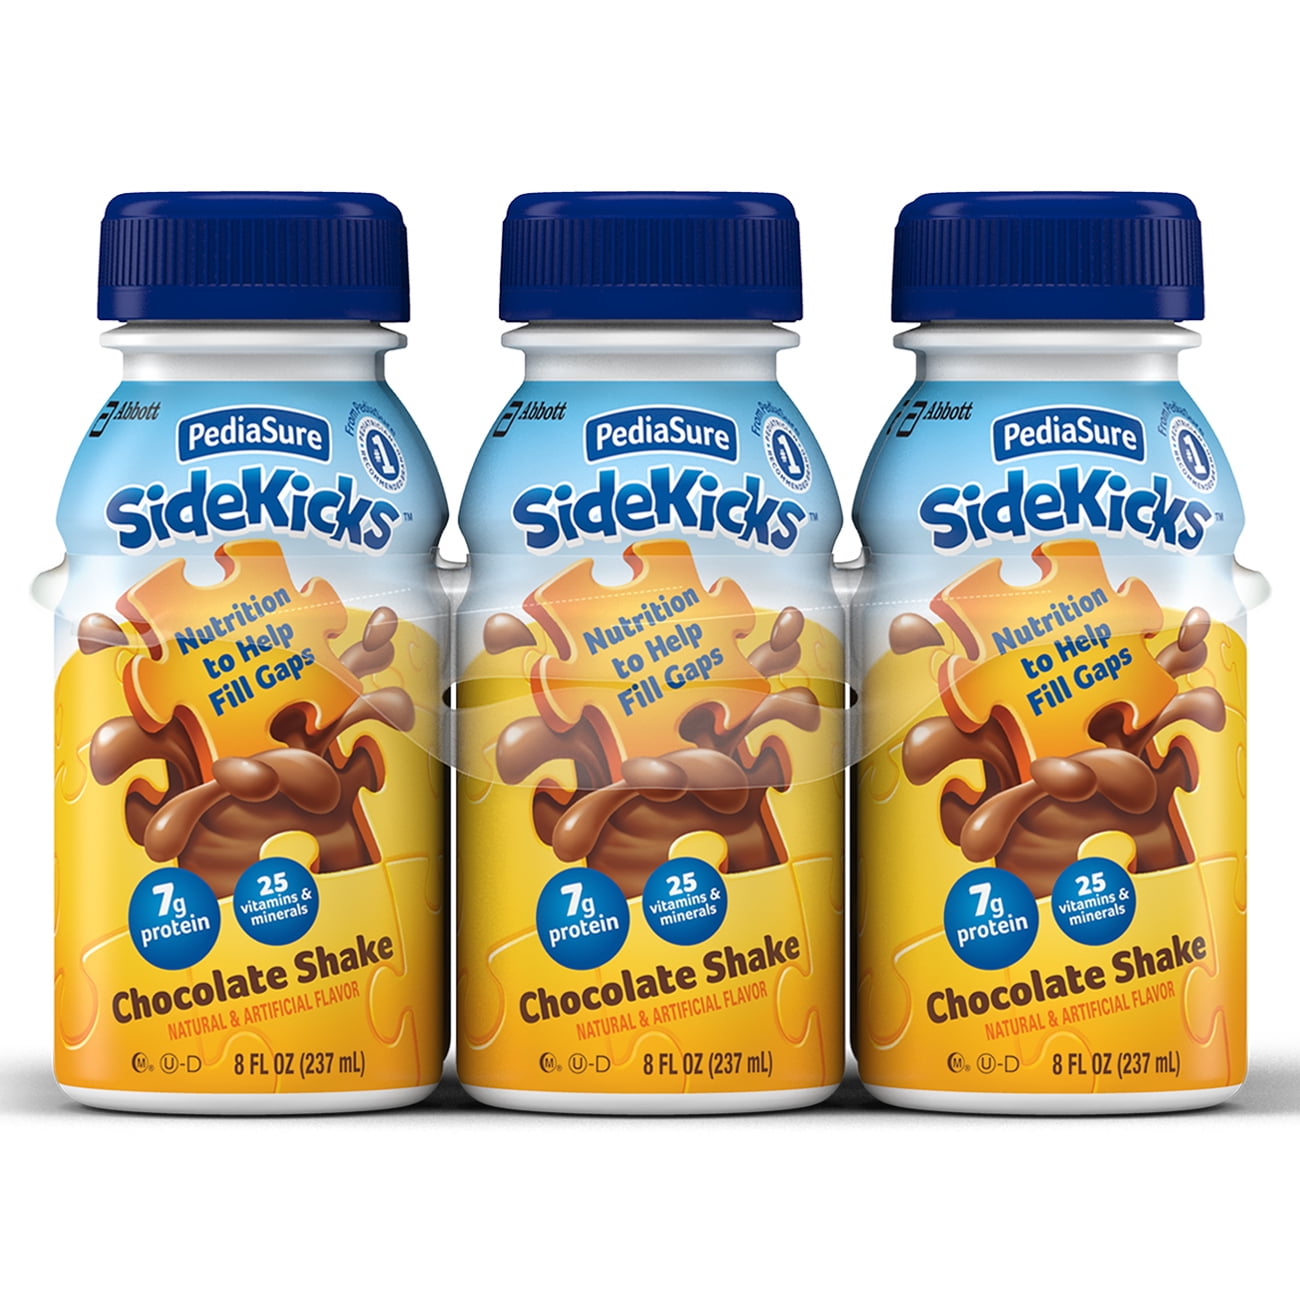 PediaSure Sidekicks Nutrition Shake, Chocolate - 6 pack, 8 fl oz bottles